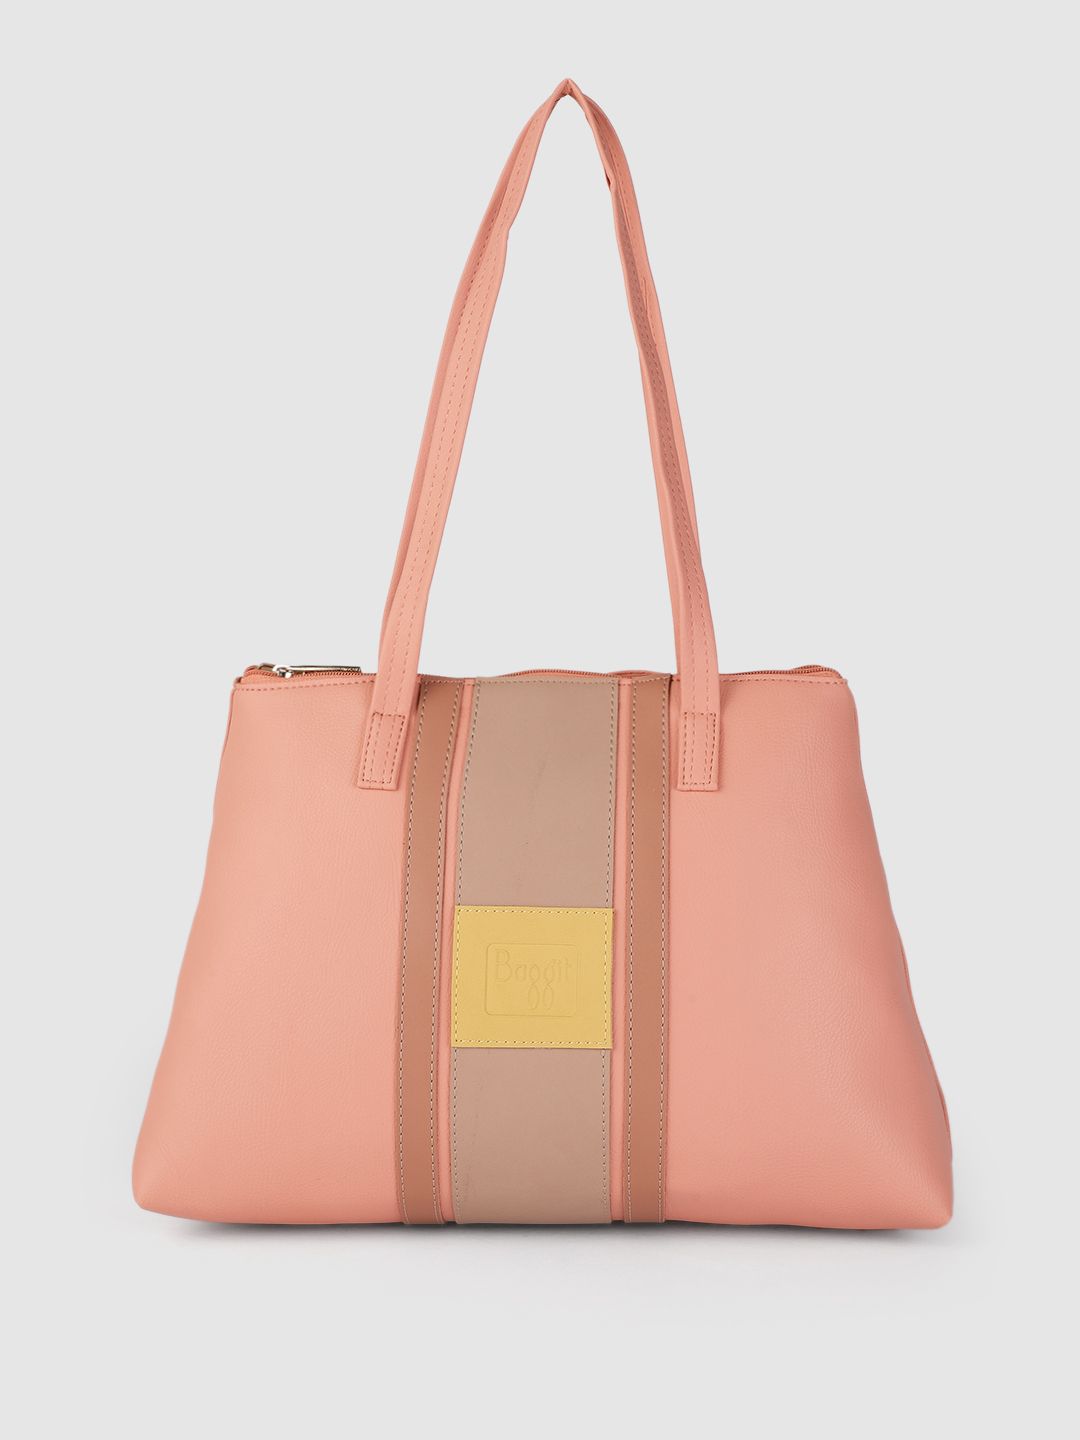 Baggit Pink & Grey Colourblocked Shoulder Bag Price in India